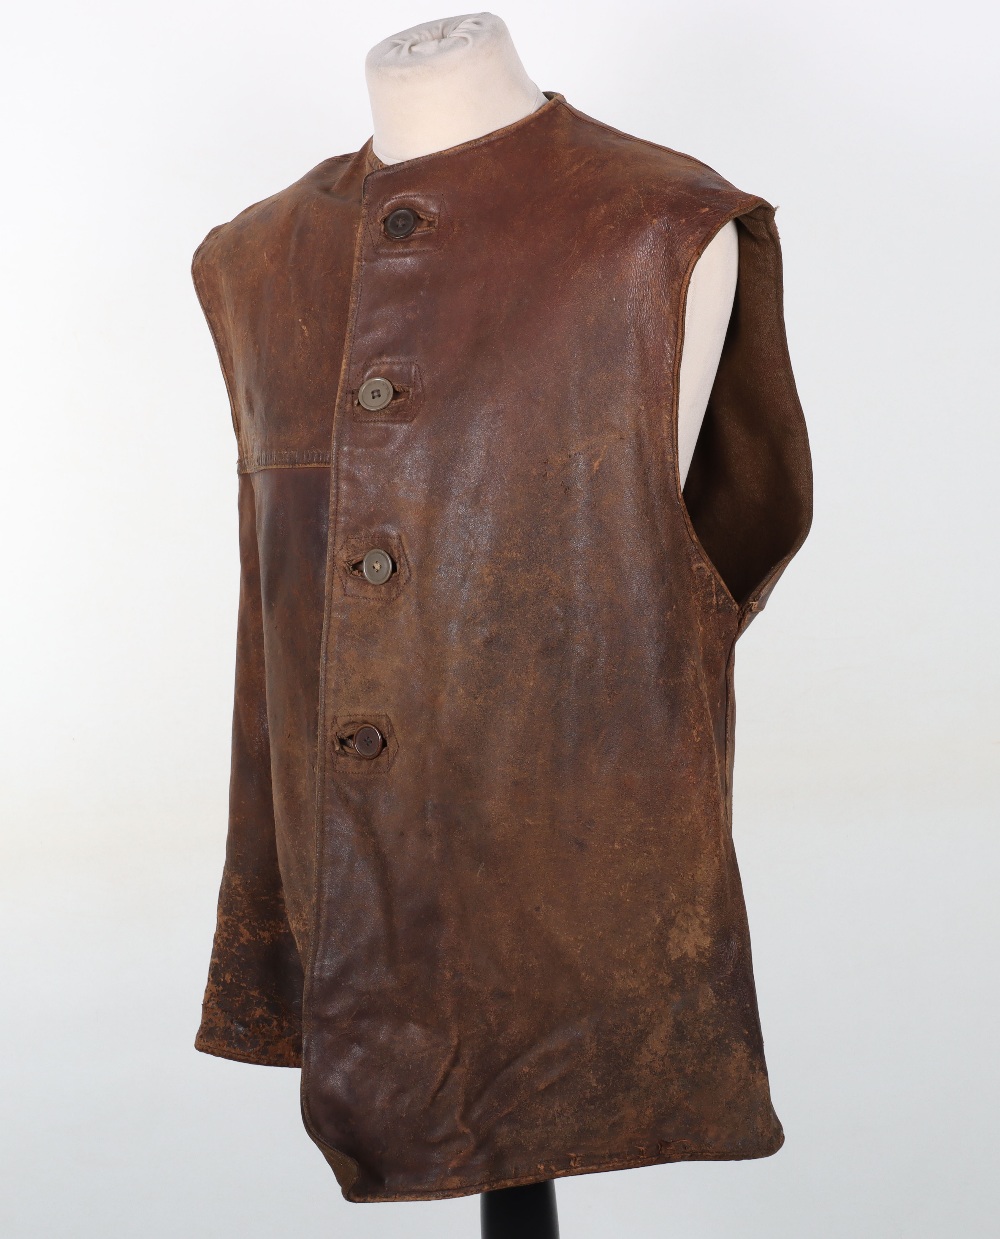 WW2 British Leather Jerkin - Image 3 of 6